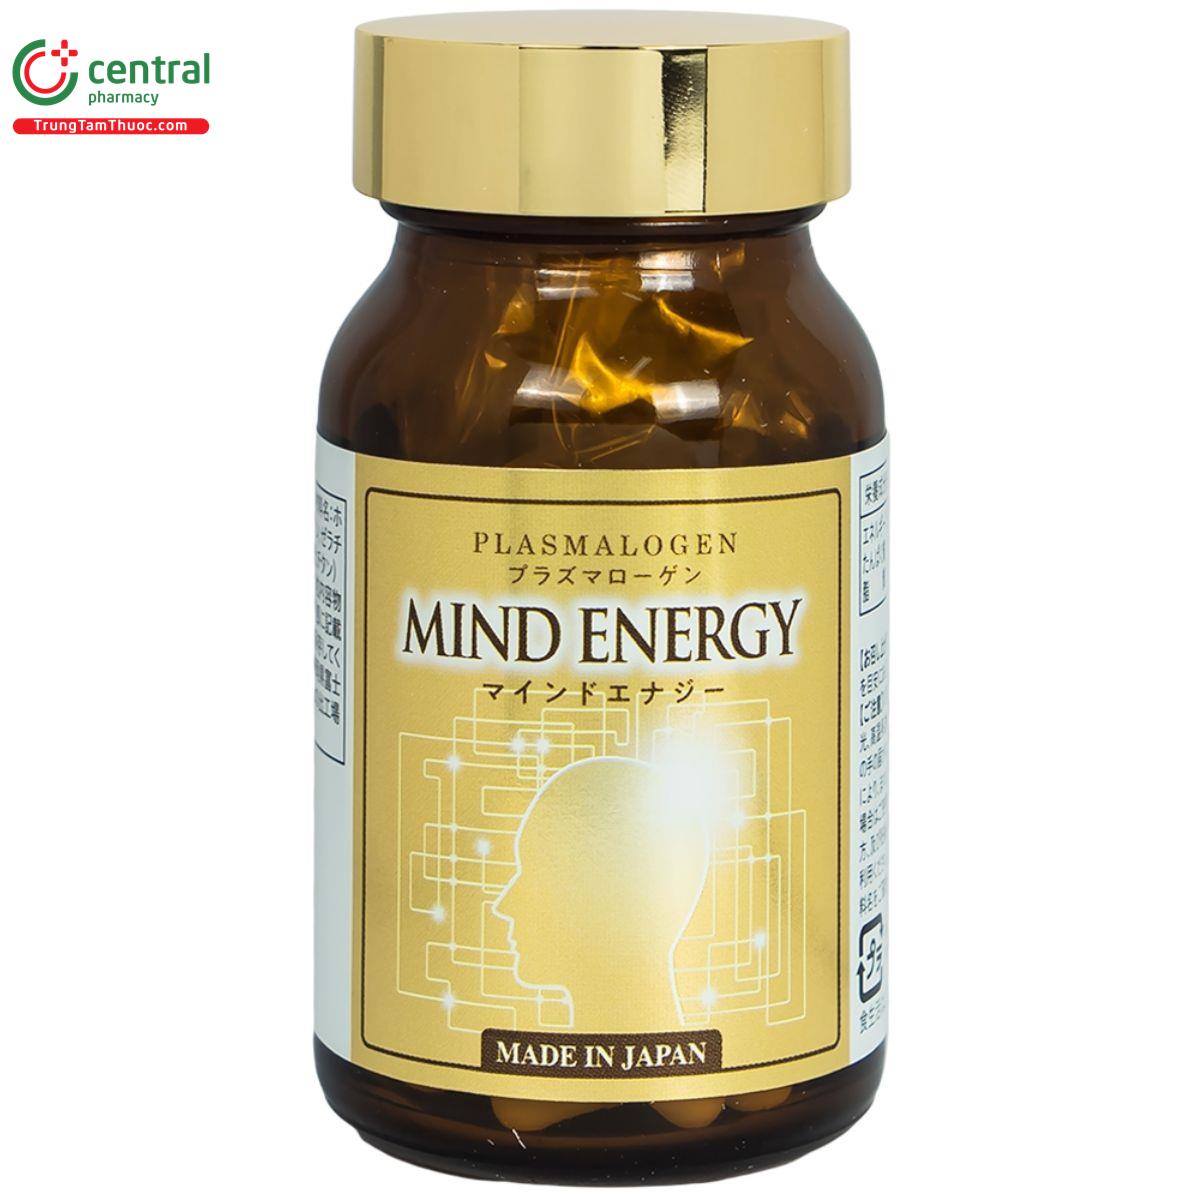 mind energy 1 Q6181